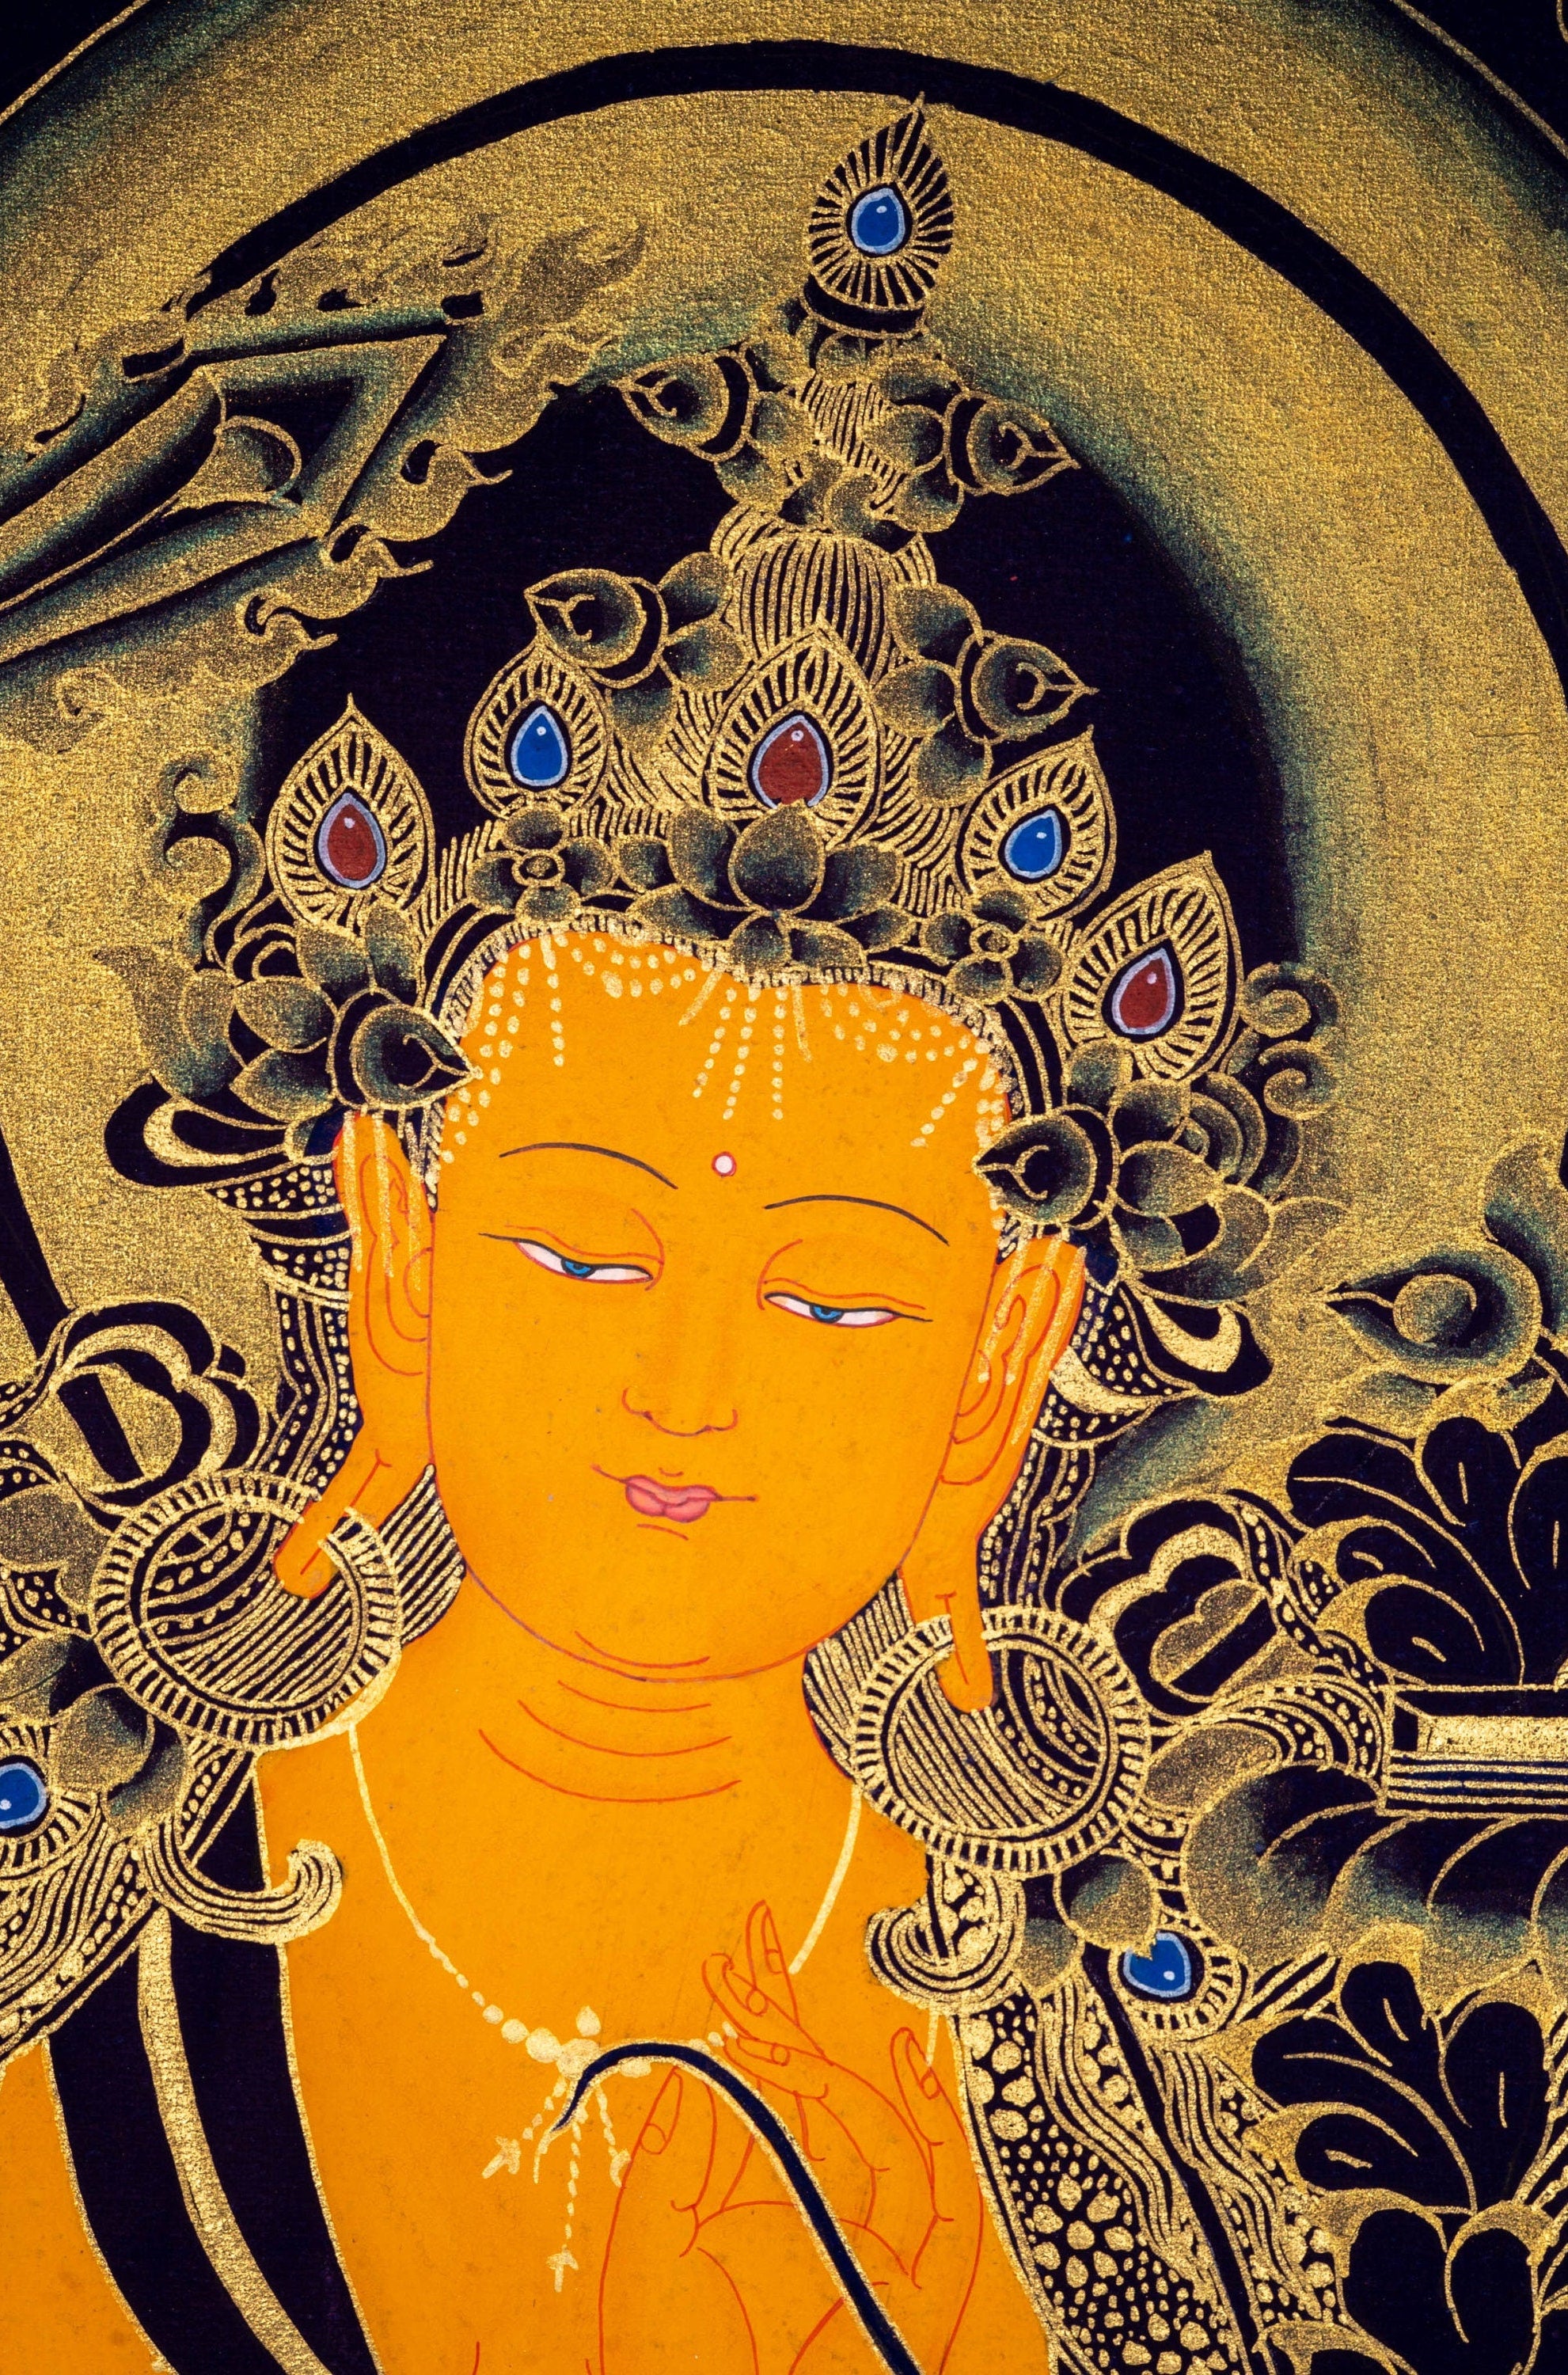 Manjushri Buddhist Deity for Wisdom and Compassion - Lucky Thanka